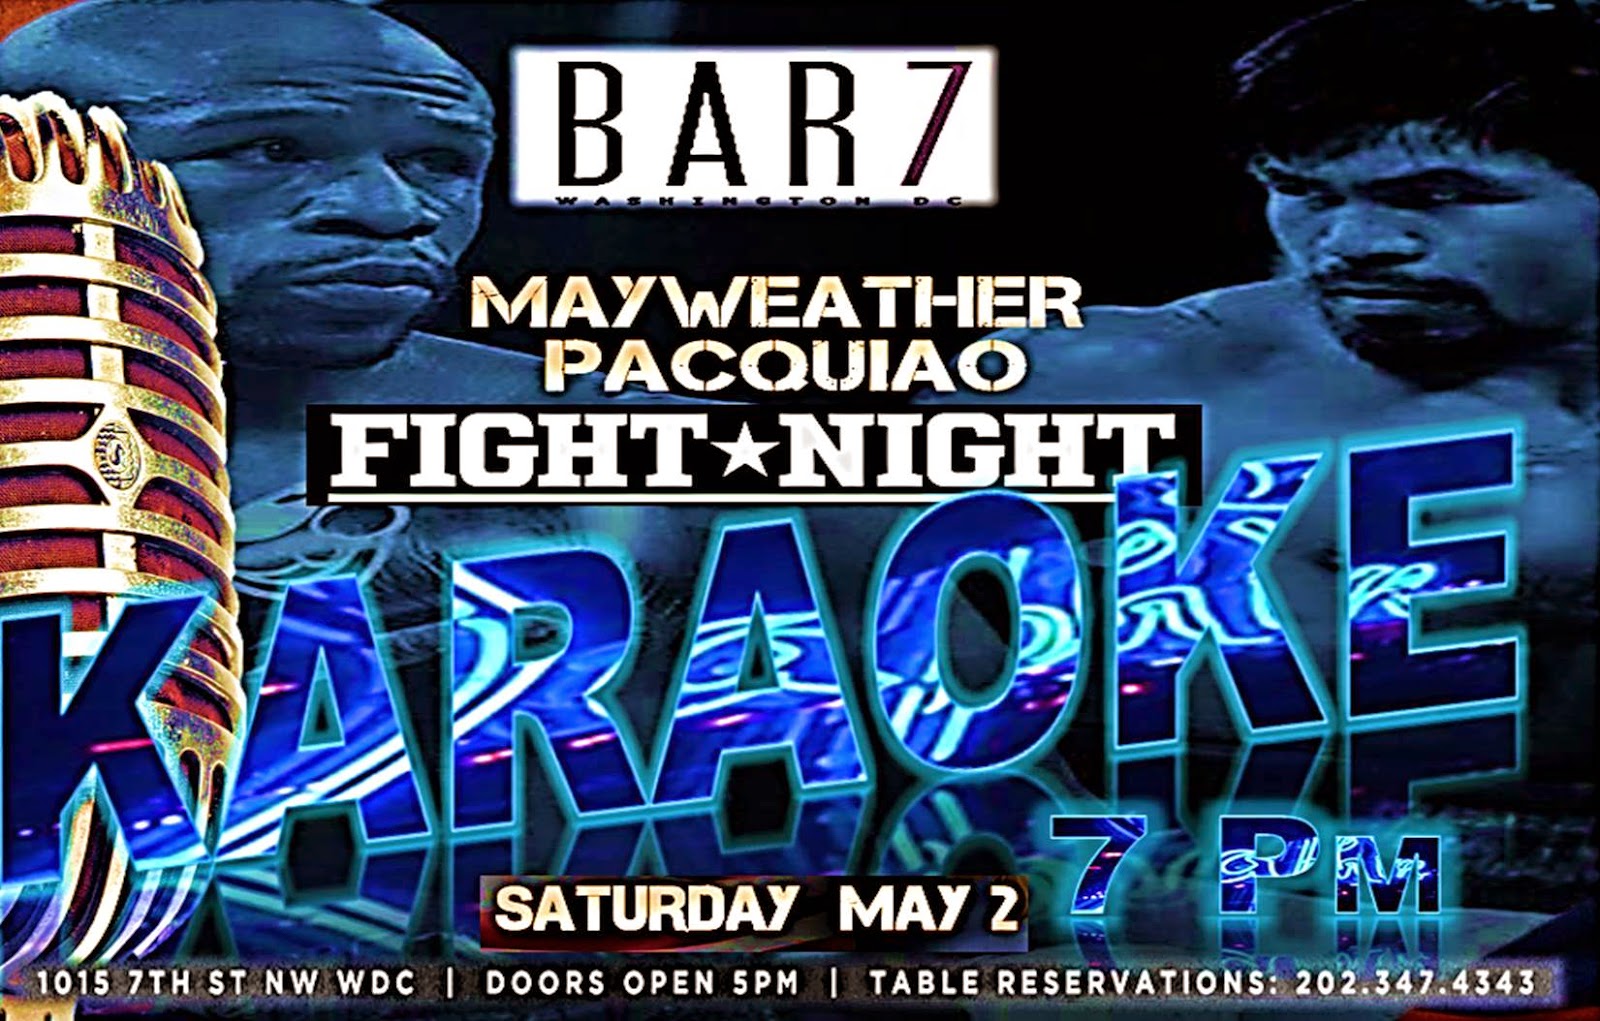  Bar 7 Karaoke Fight Night at 7 Pm 